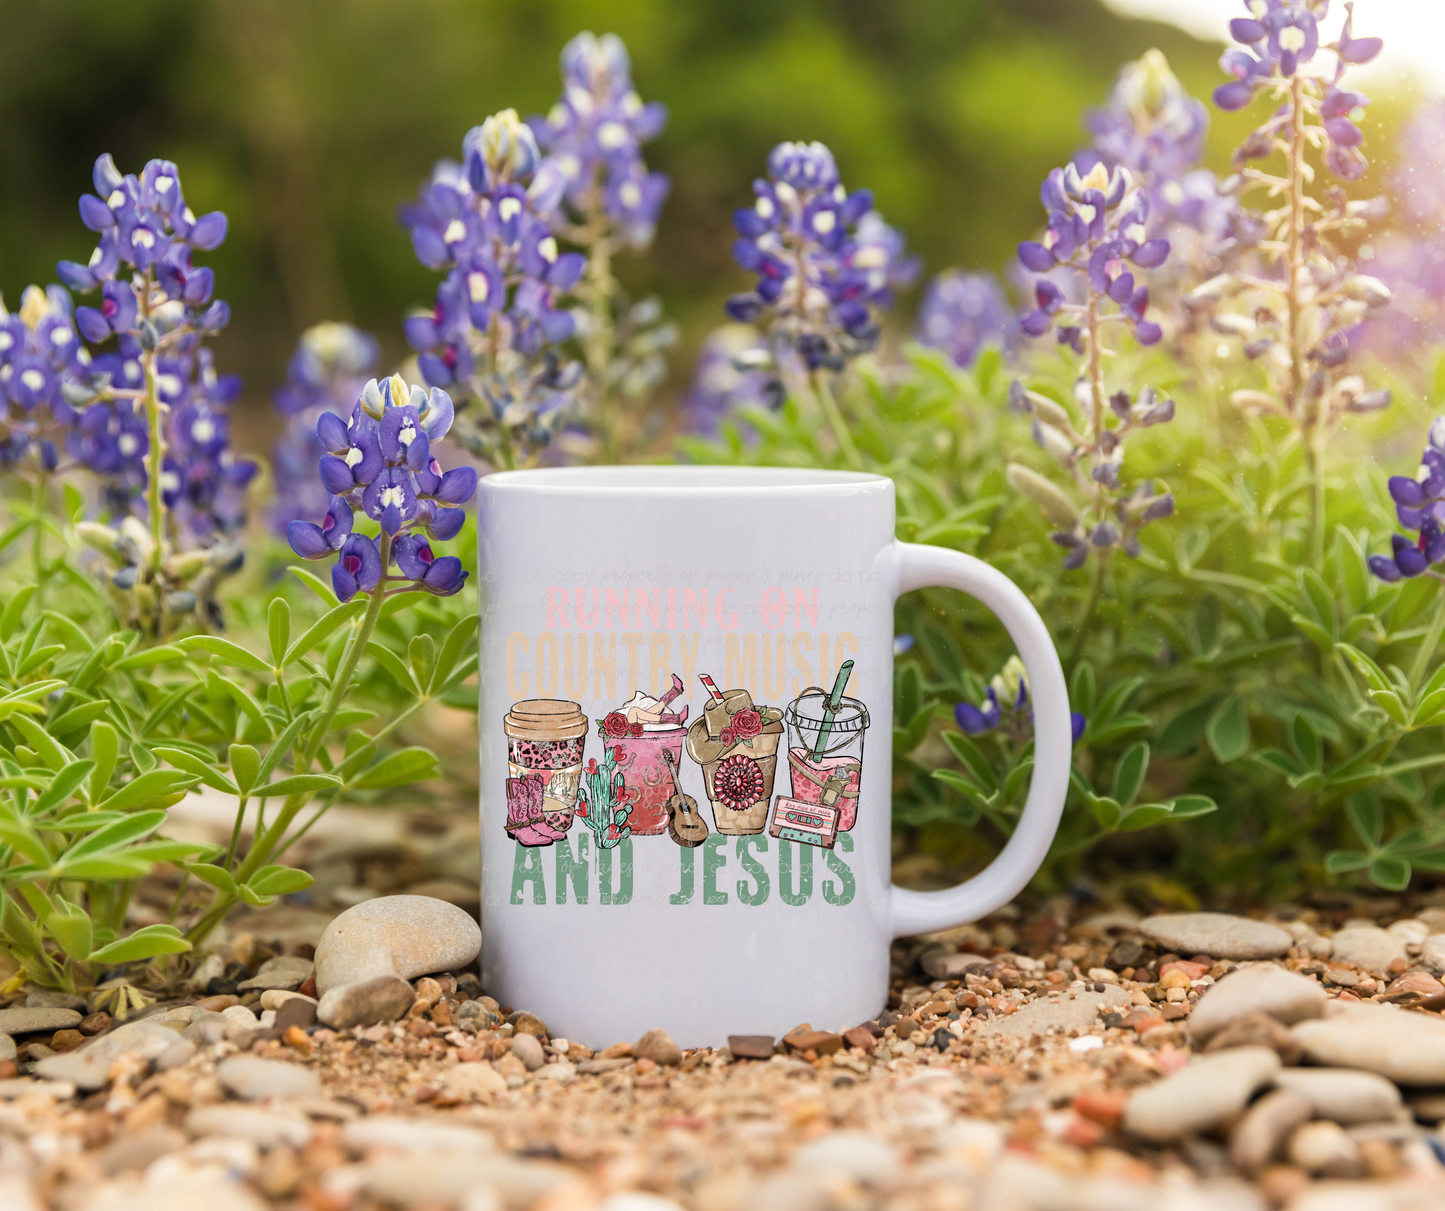 Running on Country Music and Jesus (mug)